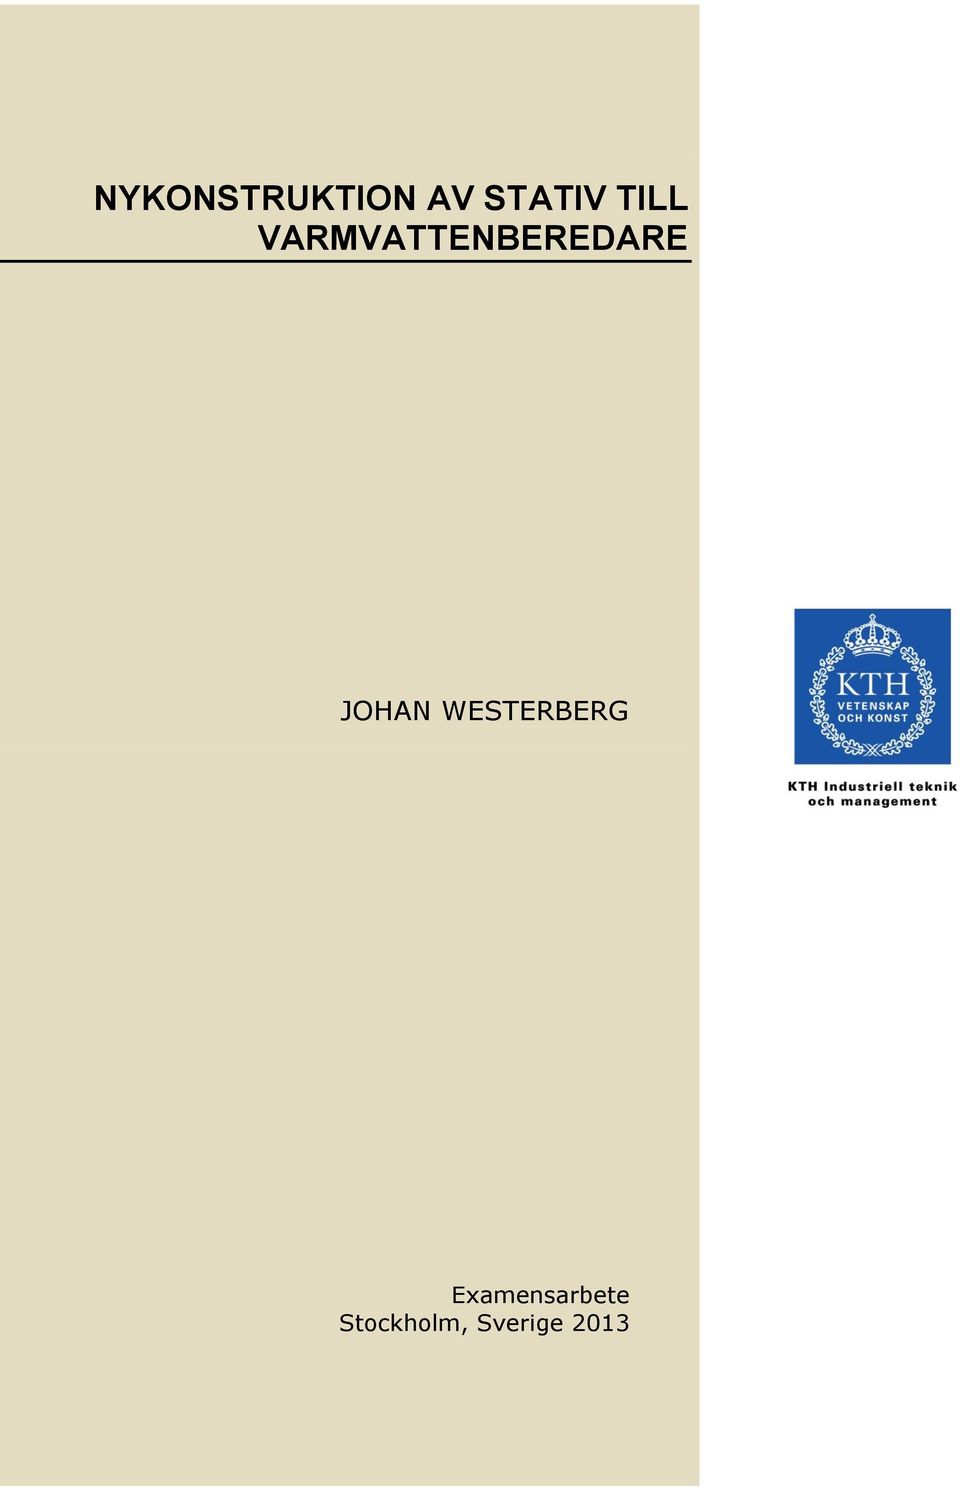 JOHAN WESTERBERG